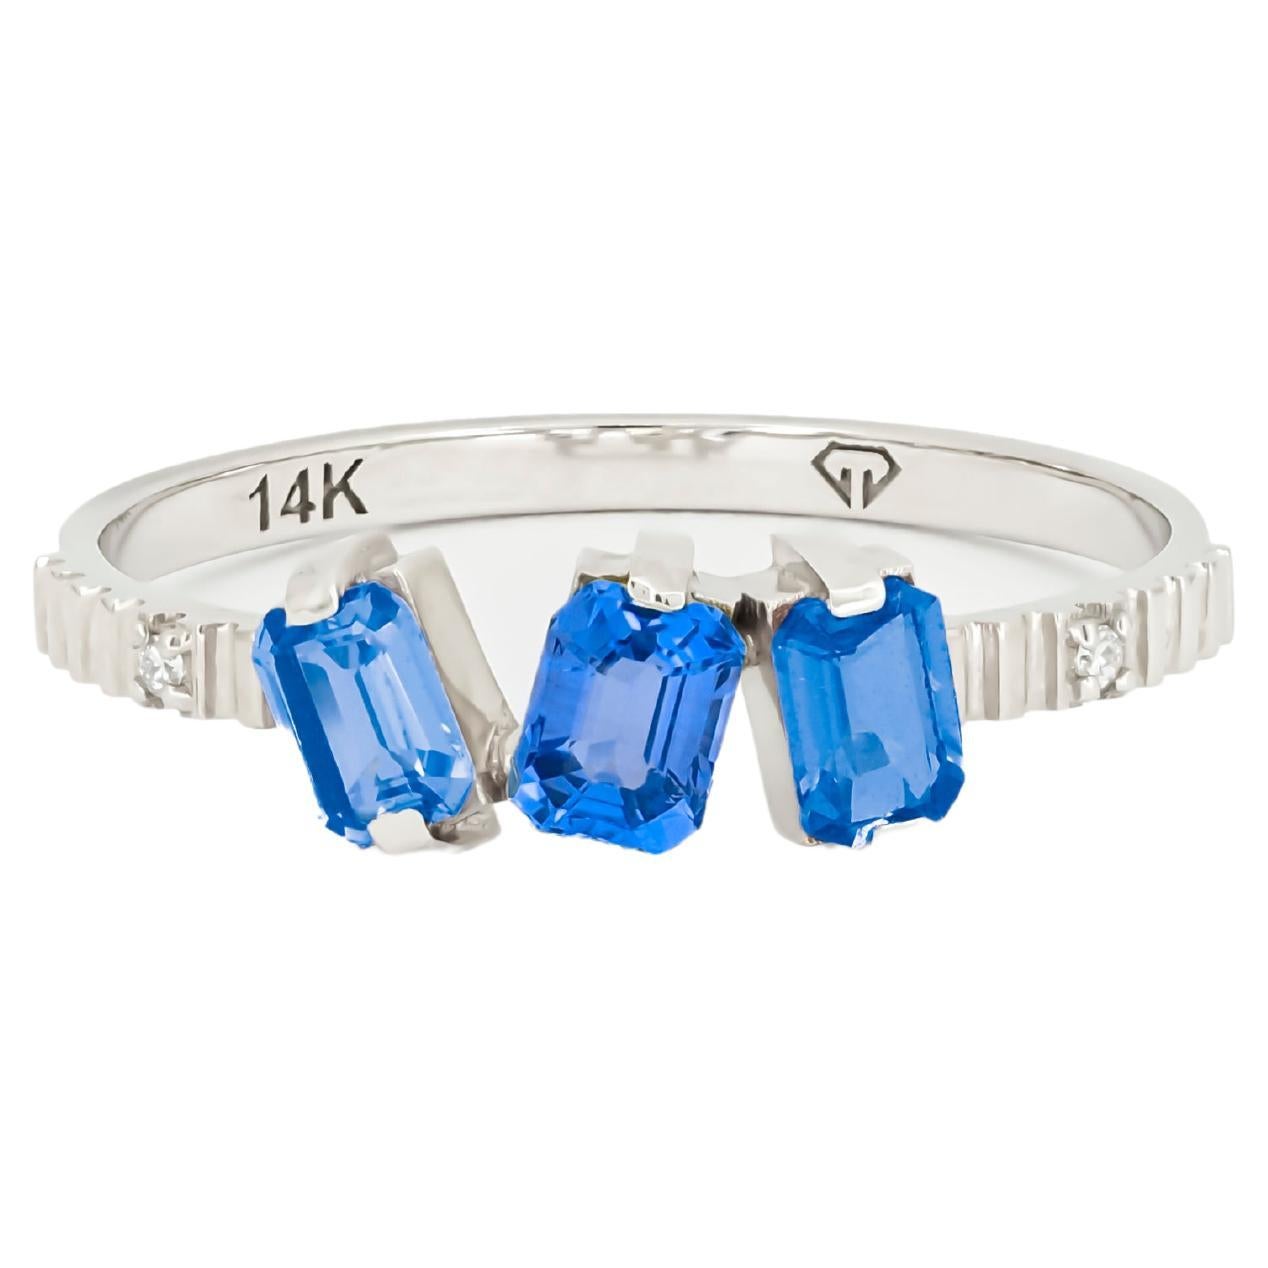 For Sale:  Monochrome blue gemstone 14k ring.